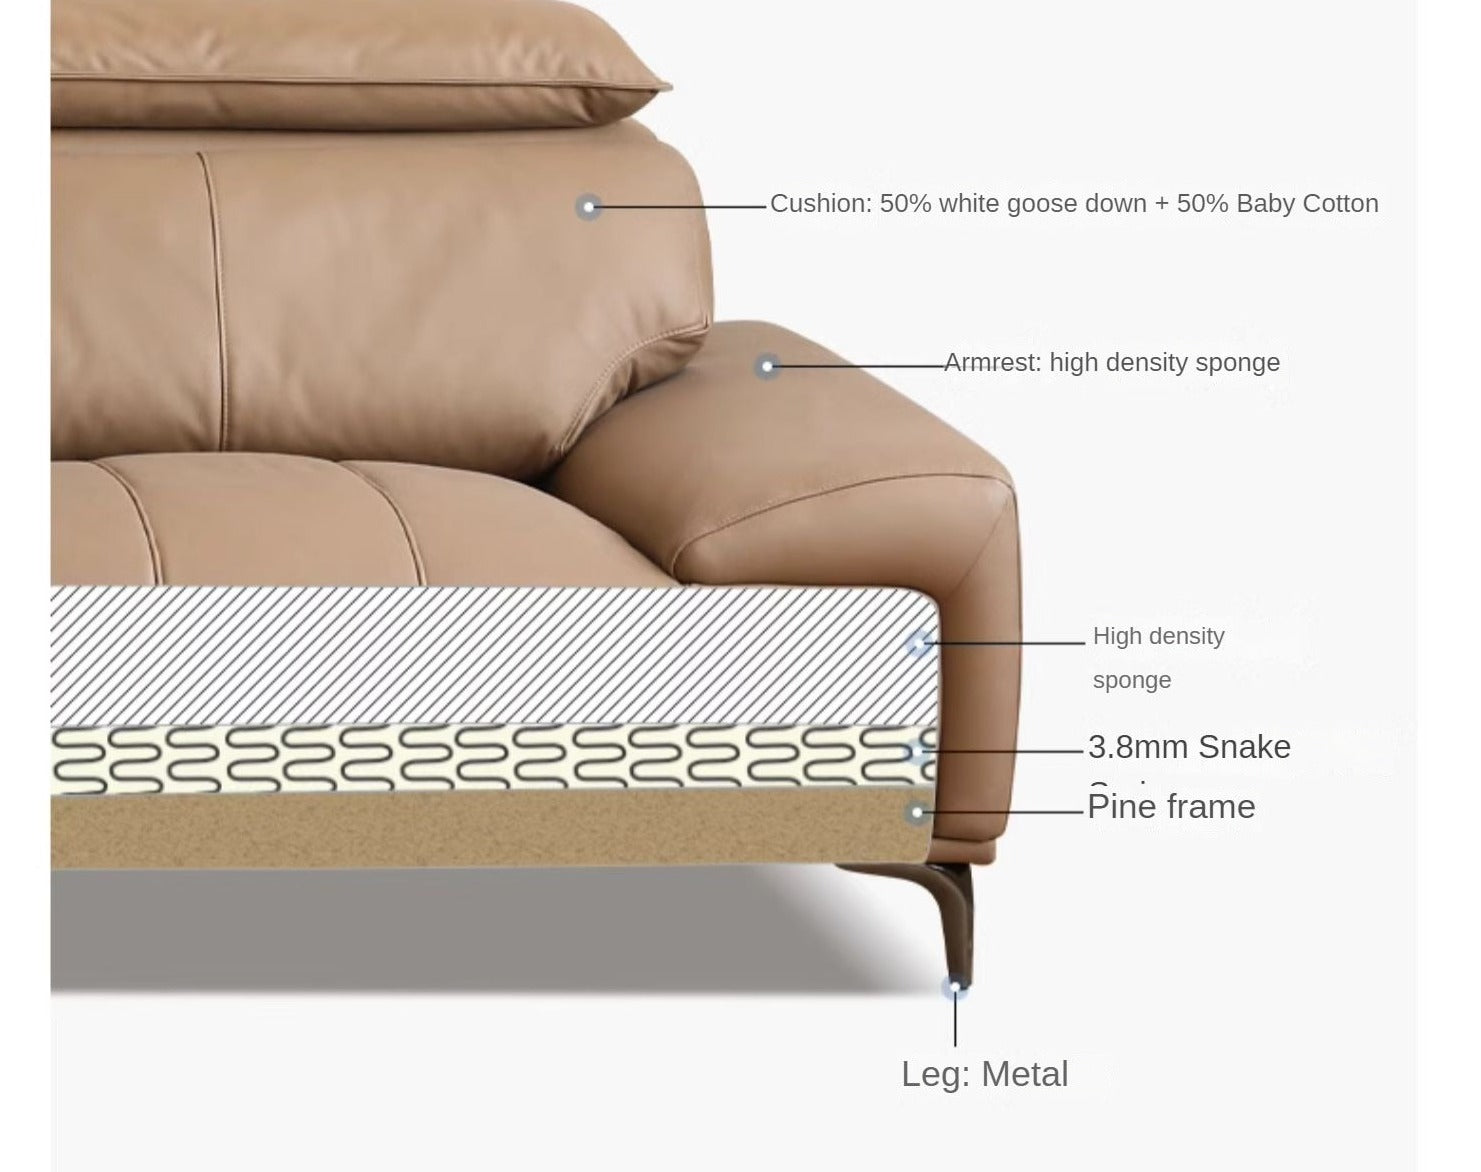 Technology Fabric Corner Down Sofa)